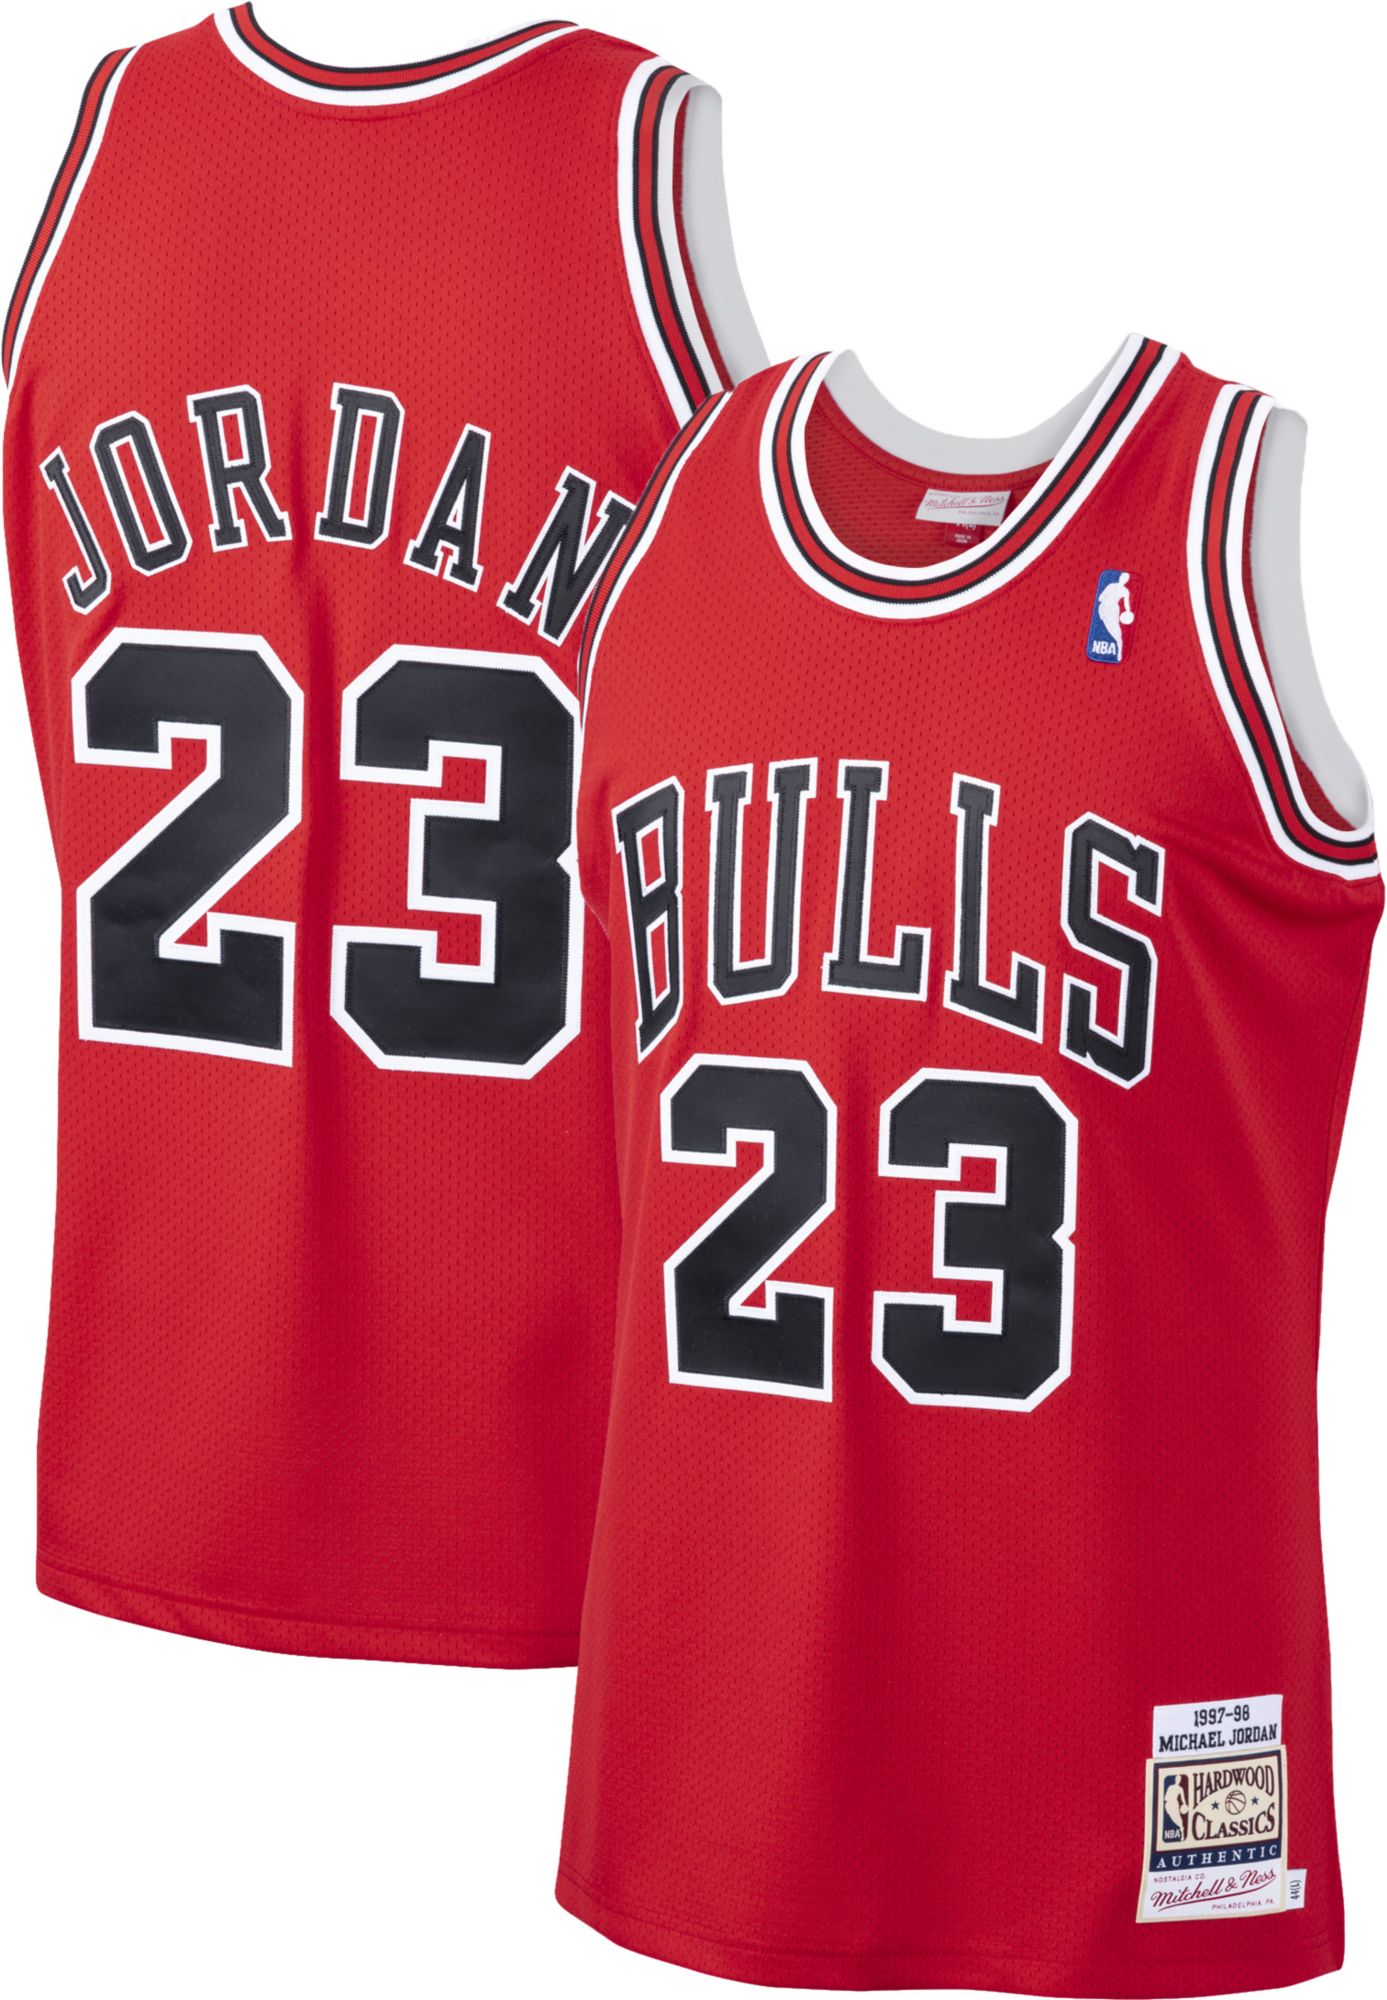 michael jordan red bulls jersey